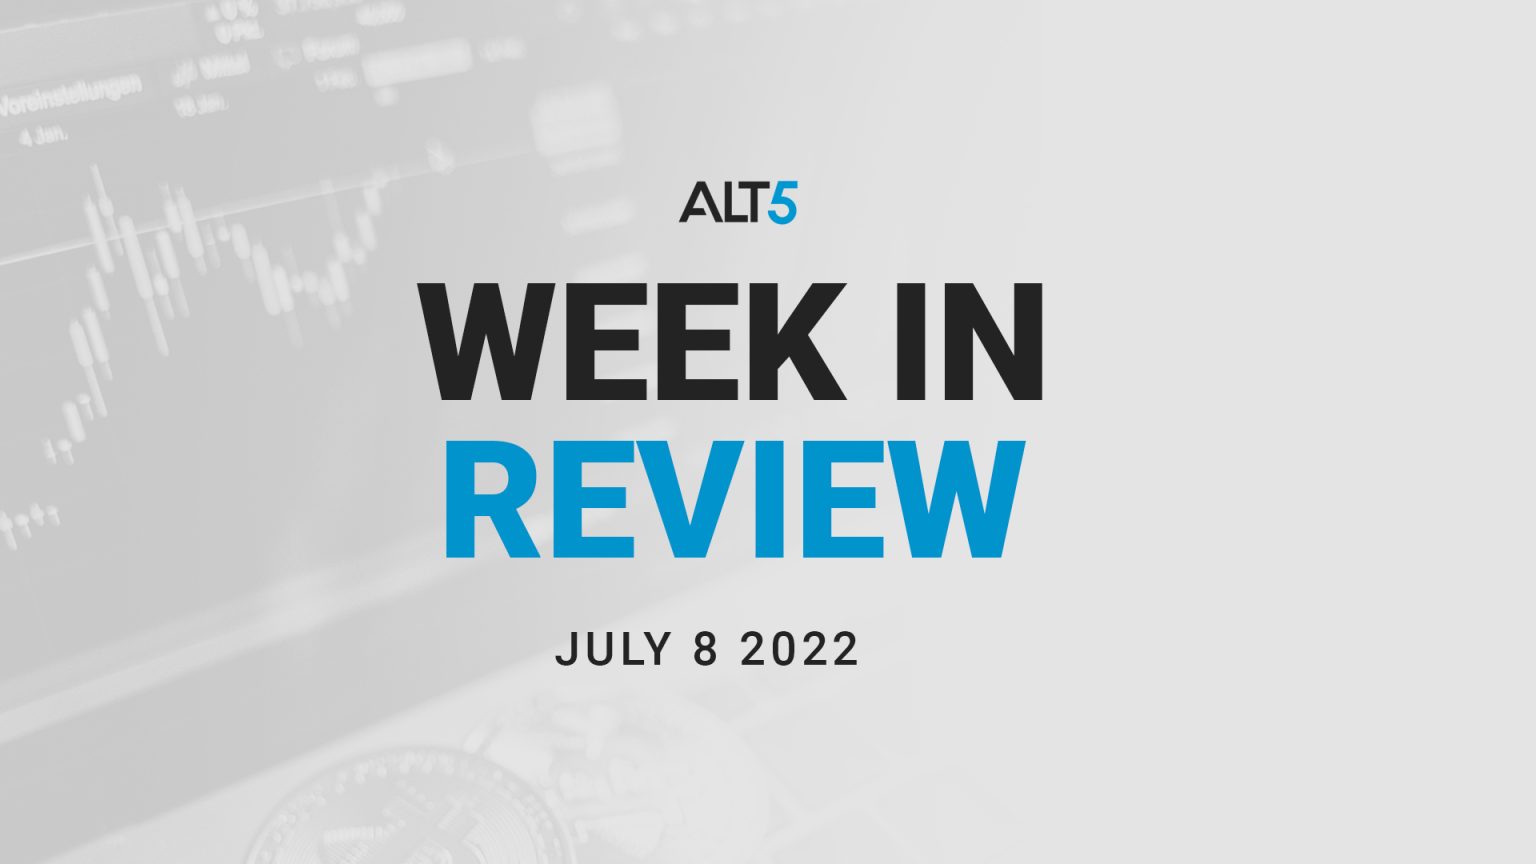 Week in review: July 8 2022